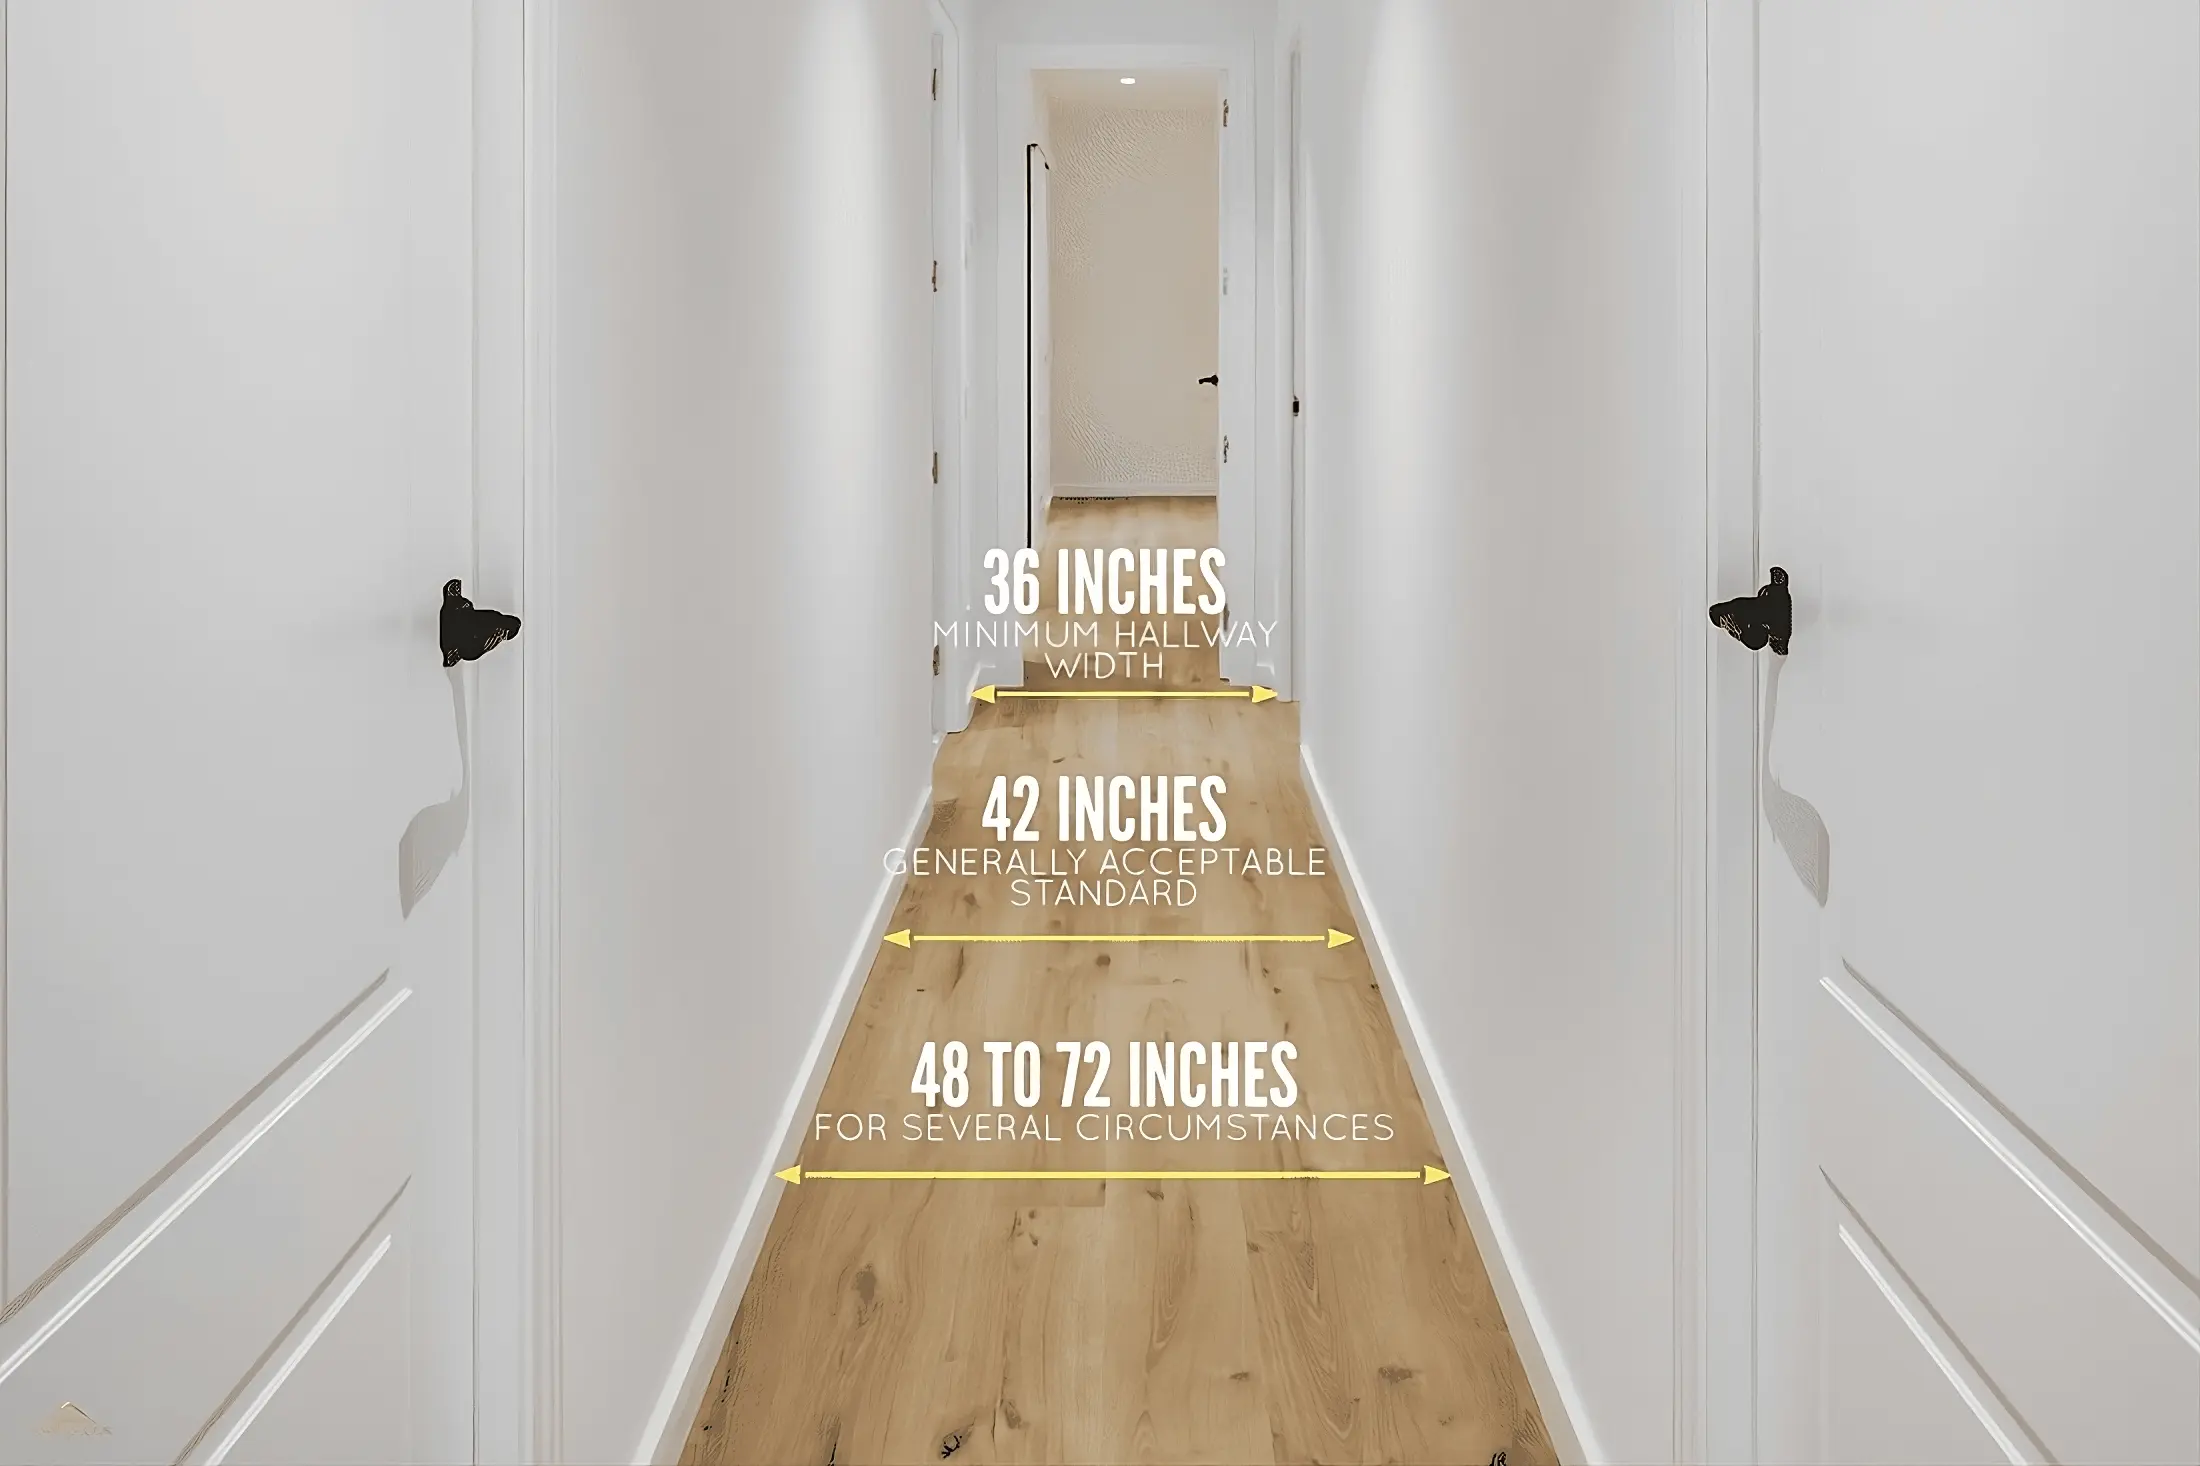 standard hallway width